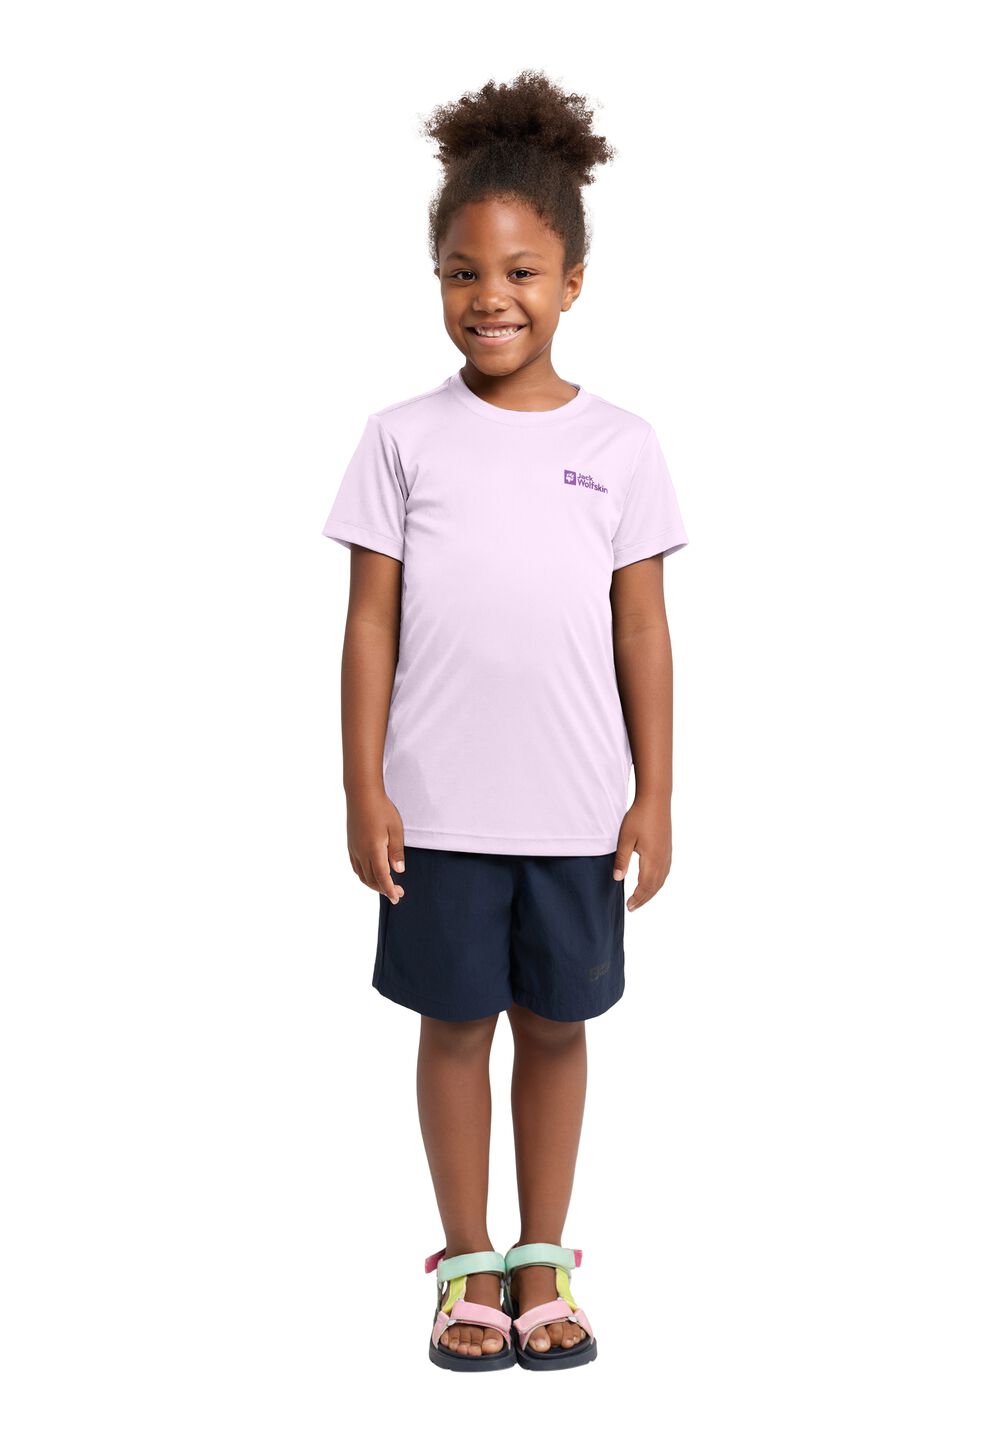 Jack Wolfskin Funktionsshirt Kinder Active Solid T-Shirt Kids 152 pale lavendar pale lavendar von Jack Wolfskin